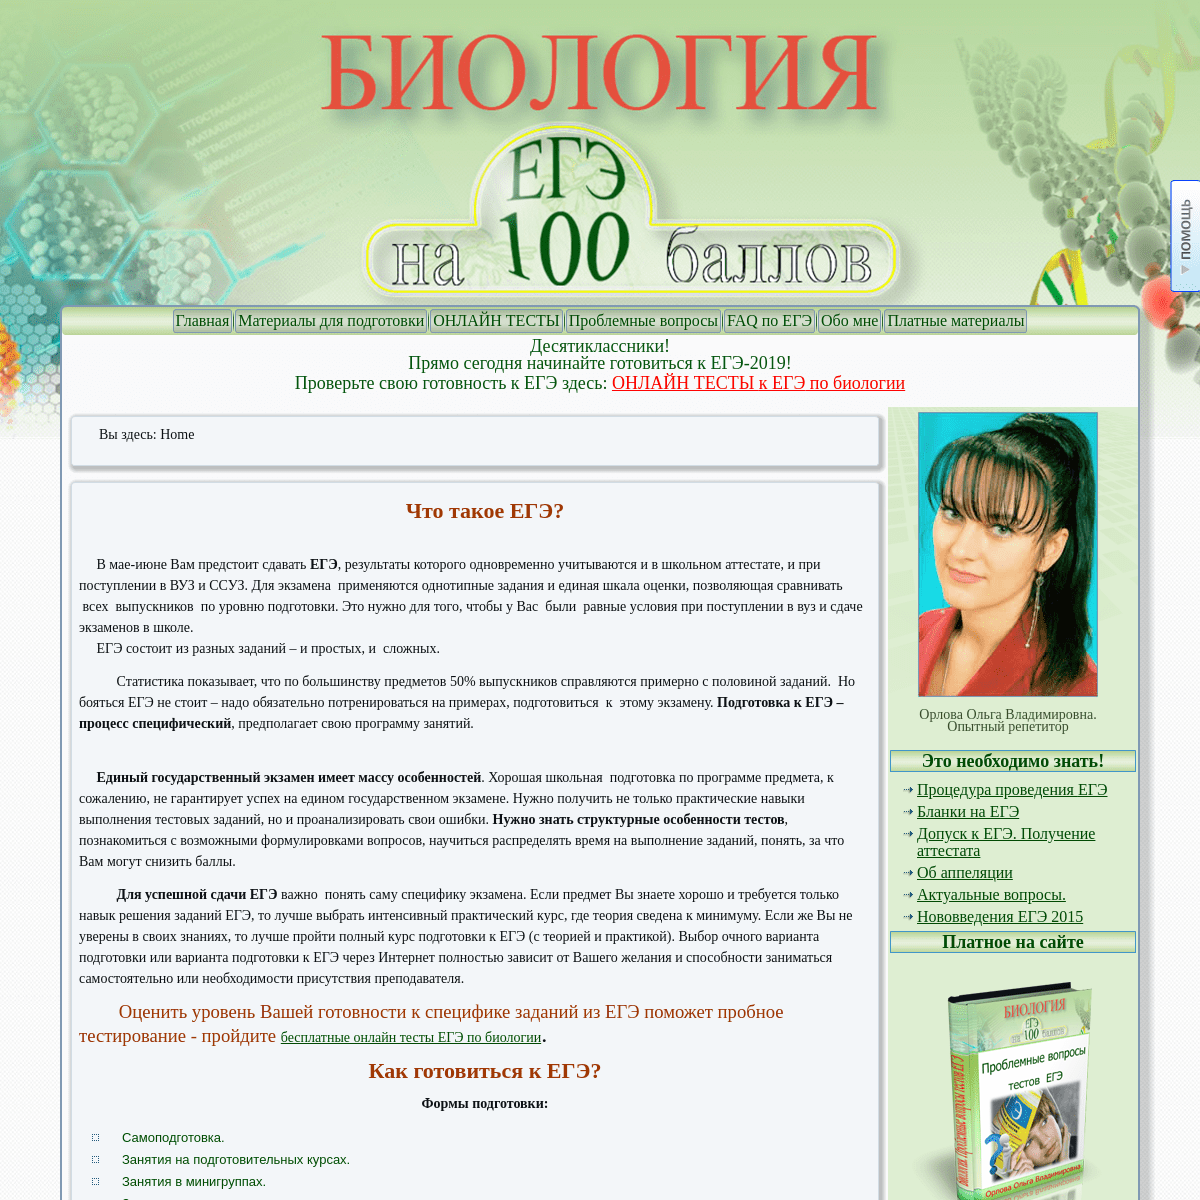 A complete backup of biology100.ru